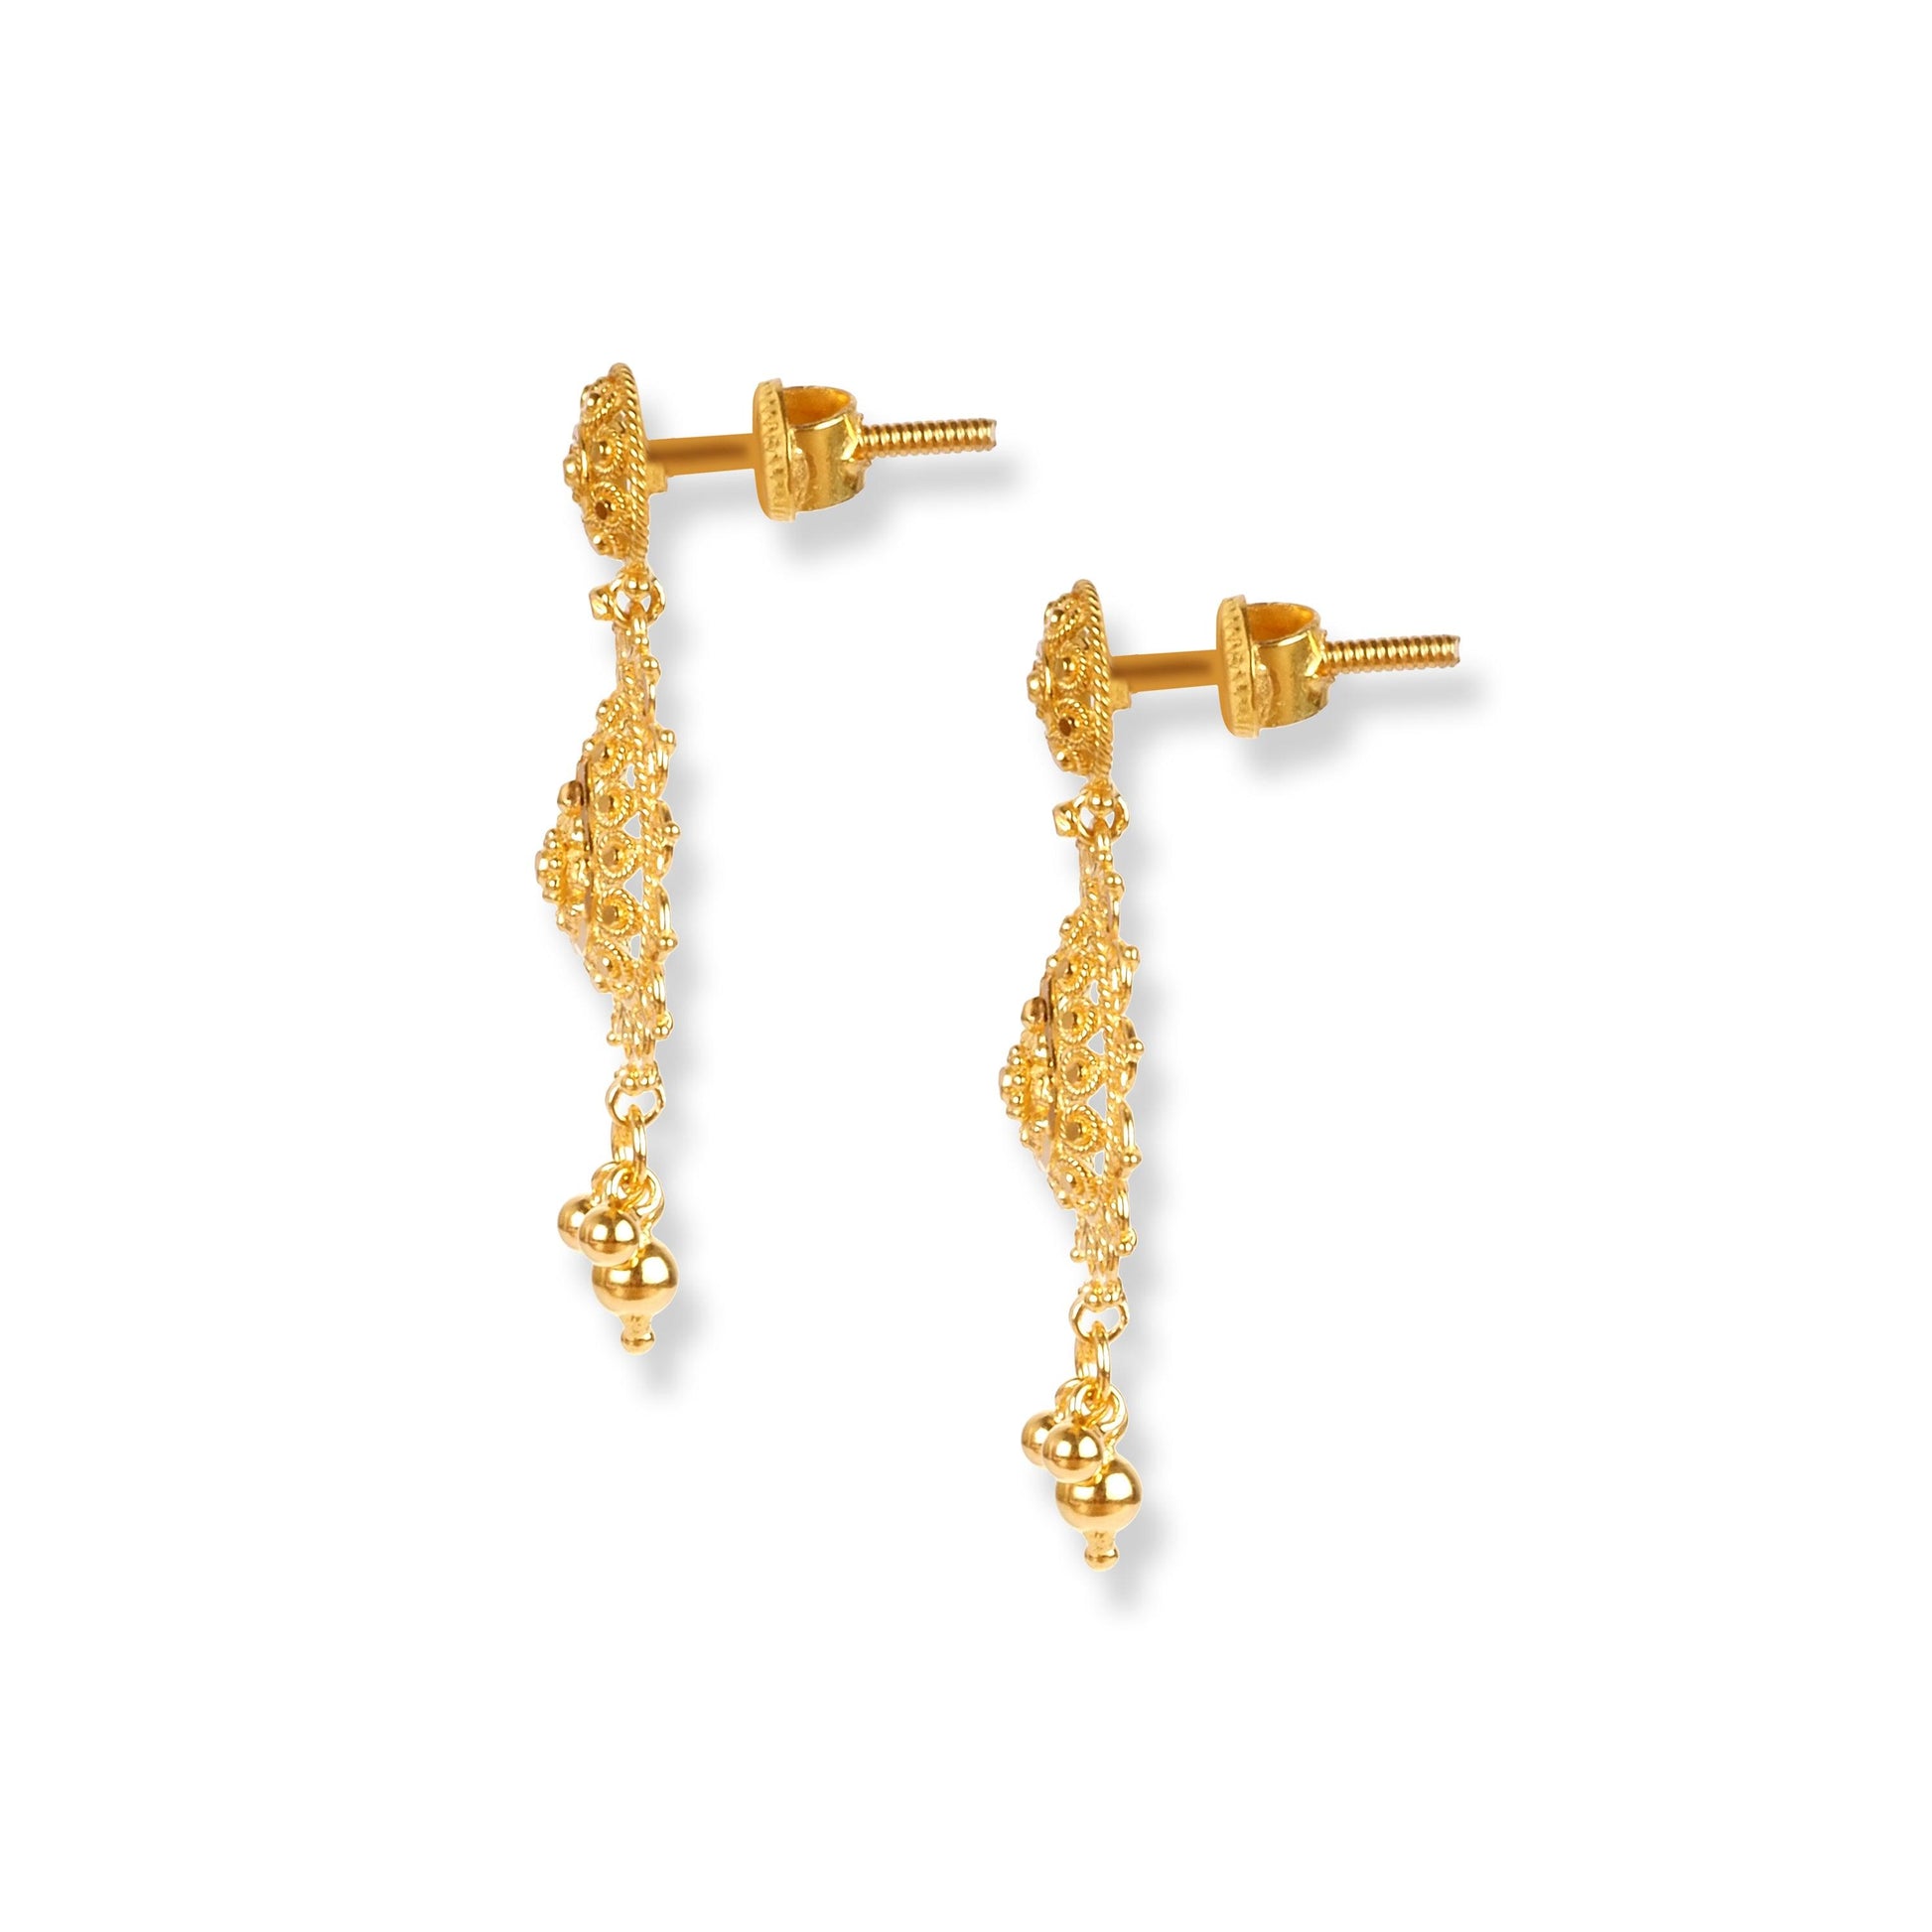 22ct Gold Set with Filigree Work N-7917 - Minar Jewellers